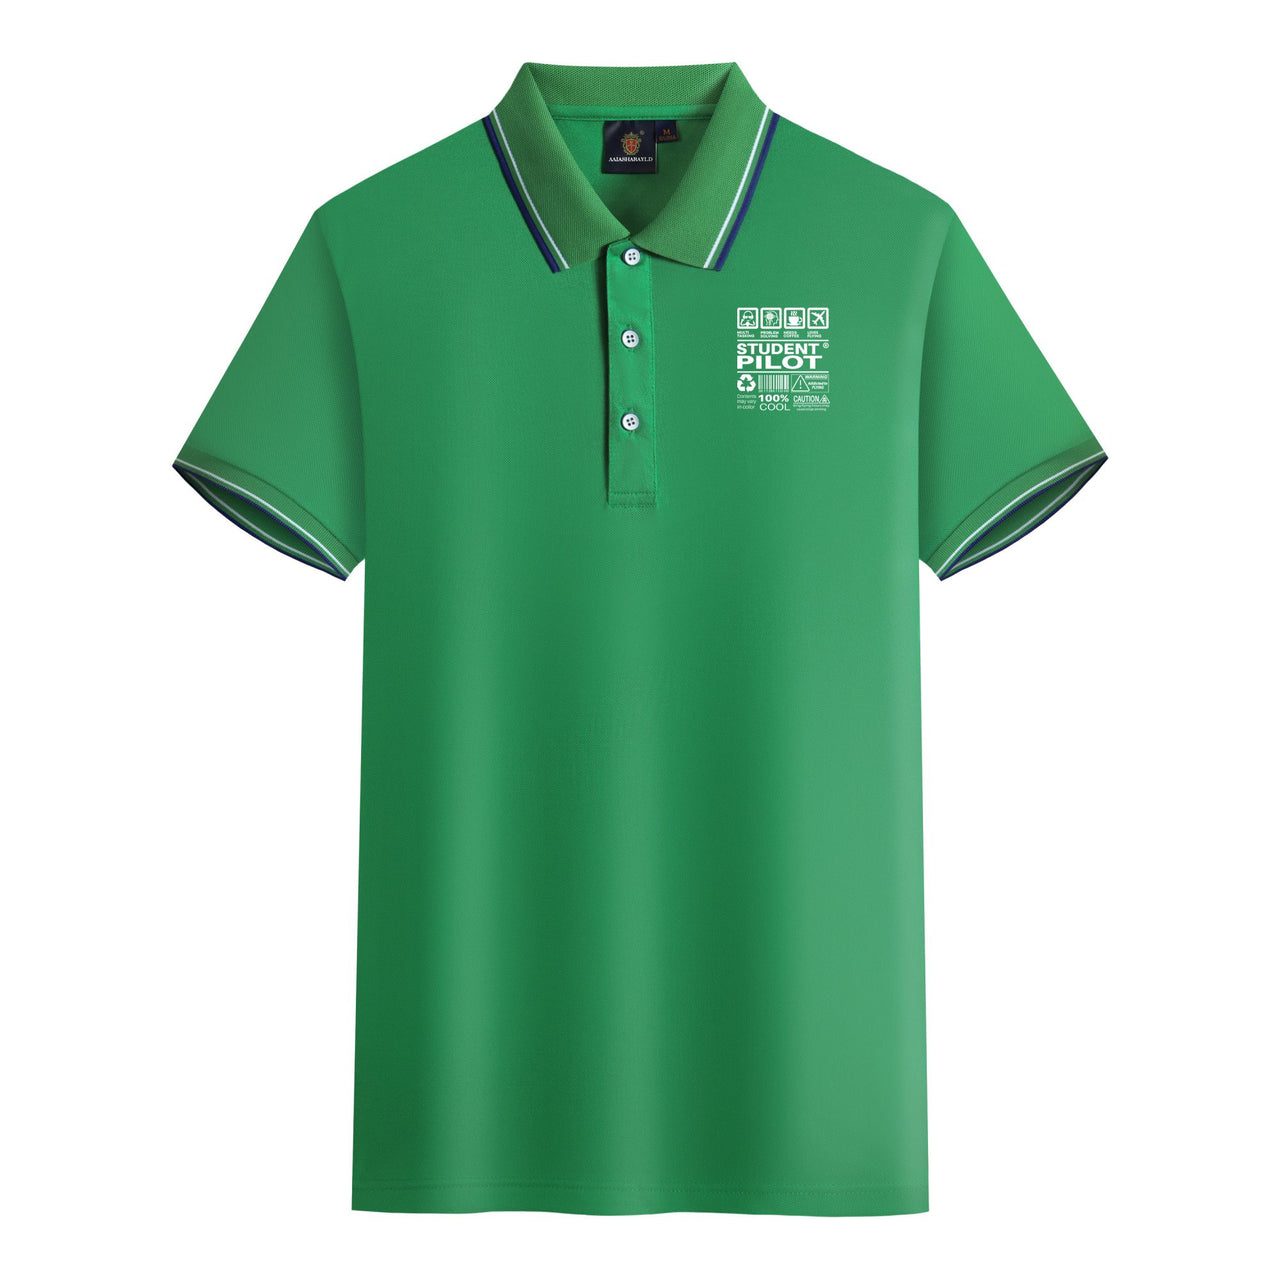 Student Pilot Label Designed Stylish Polo T-Shirts